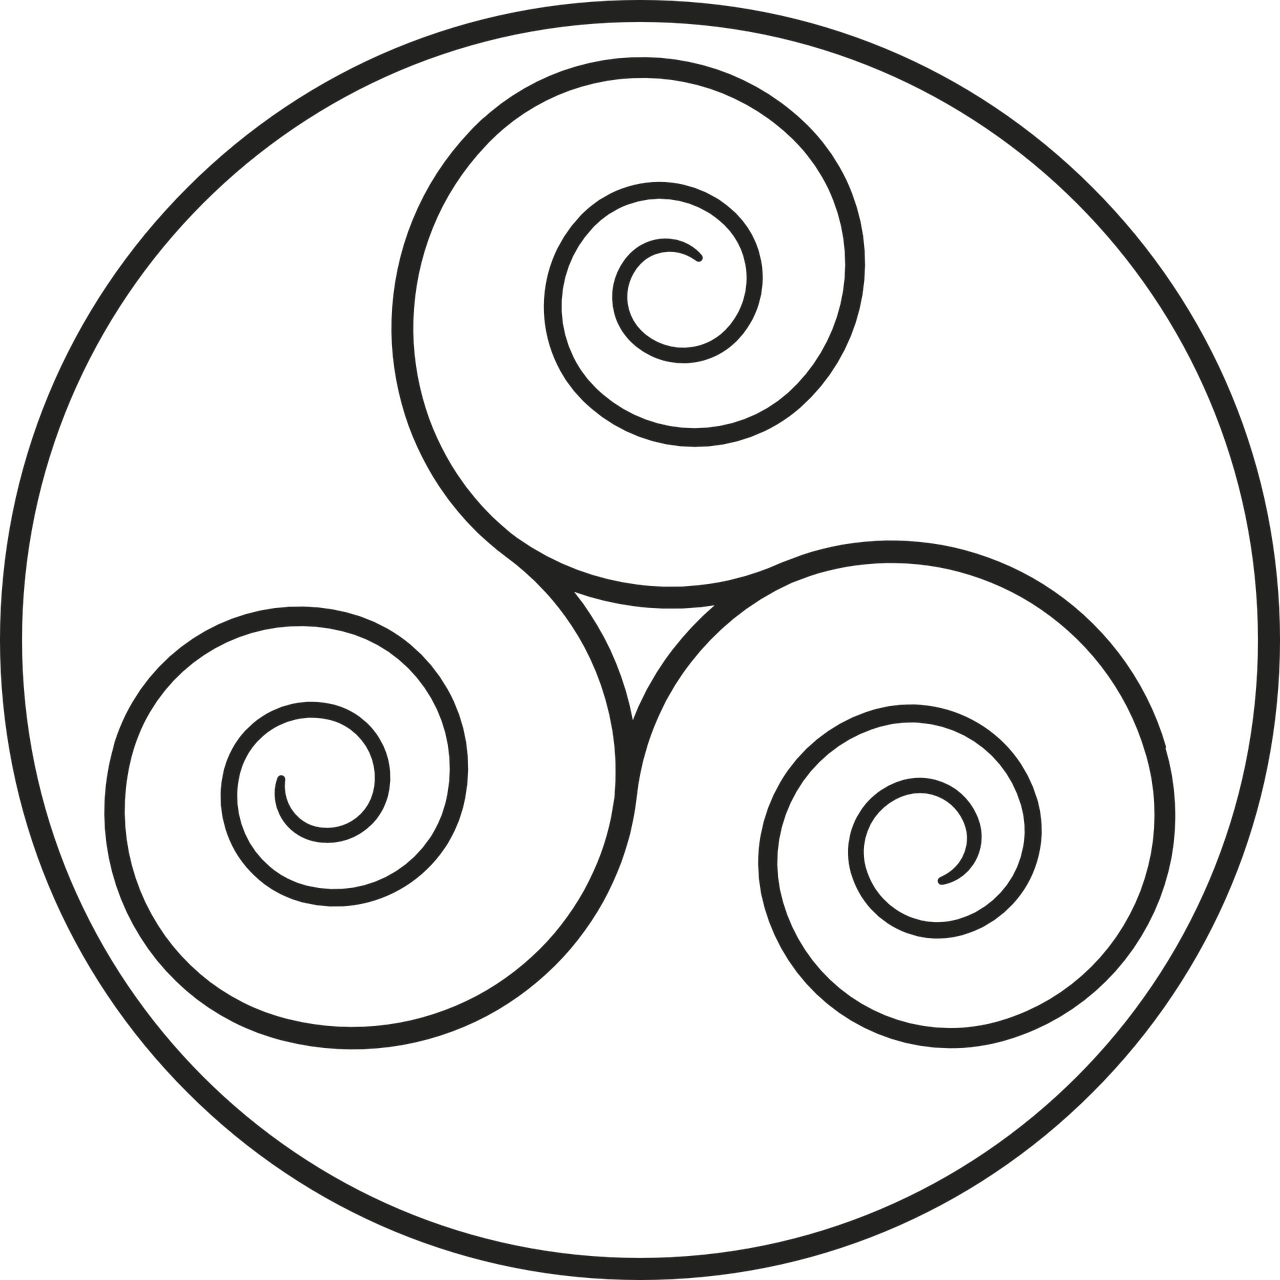 celtic symbols for family unity